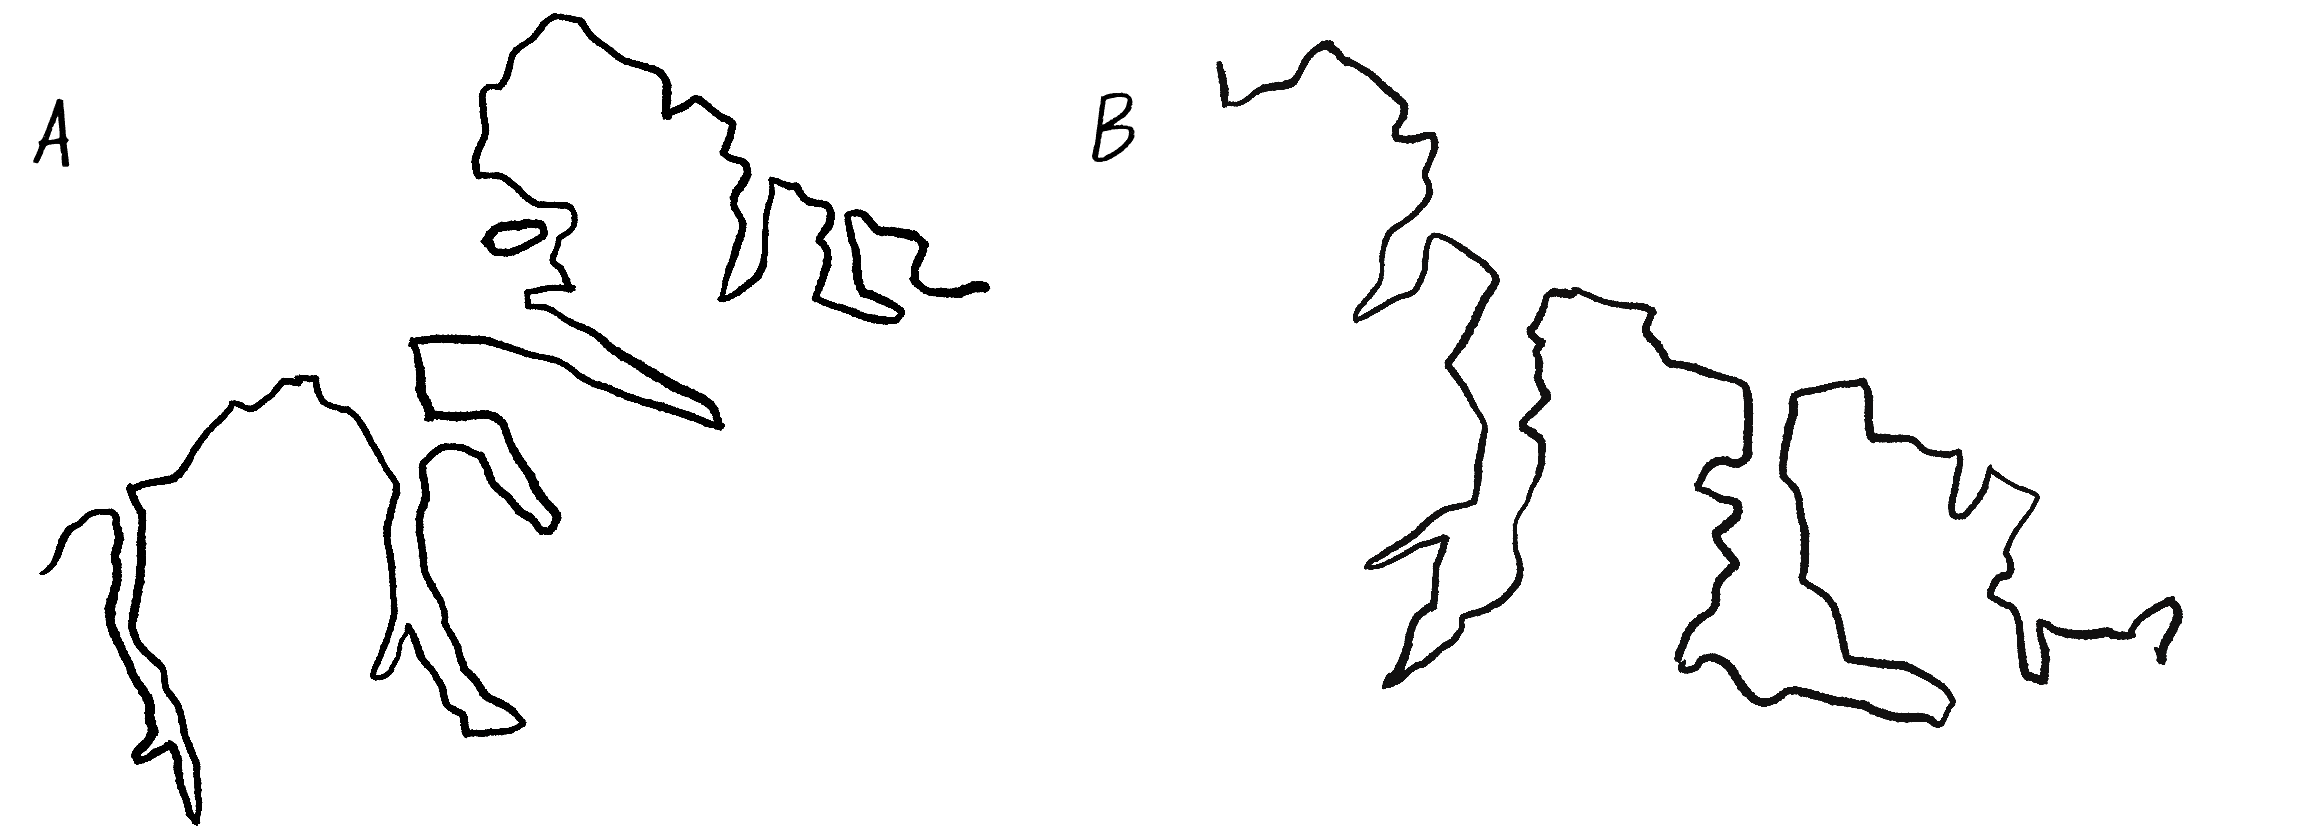 Figure 8.4: Two coastlines